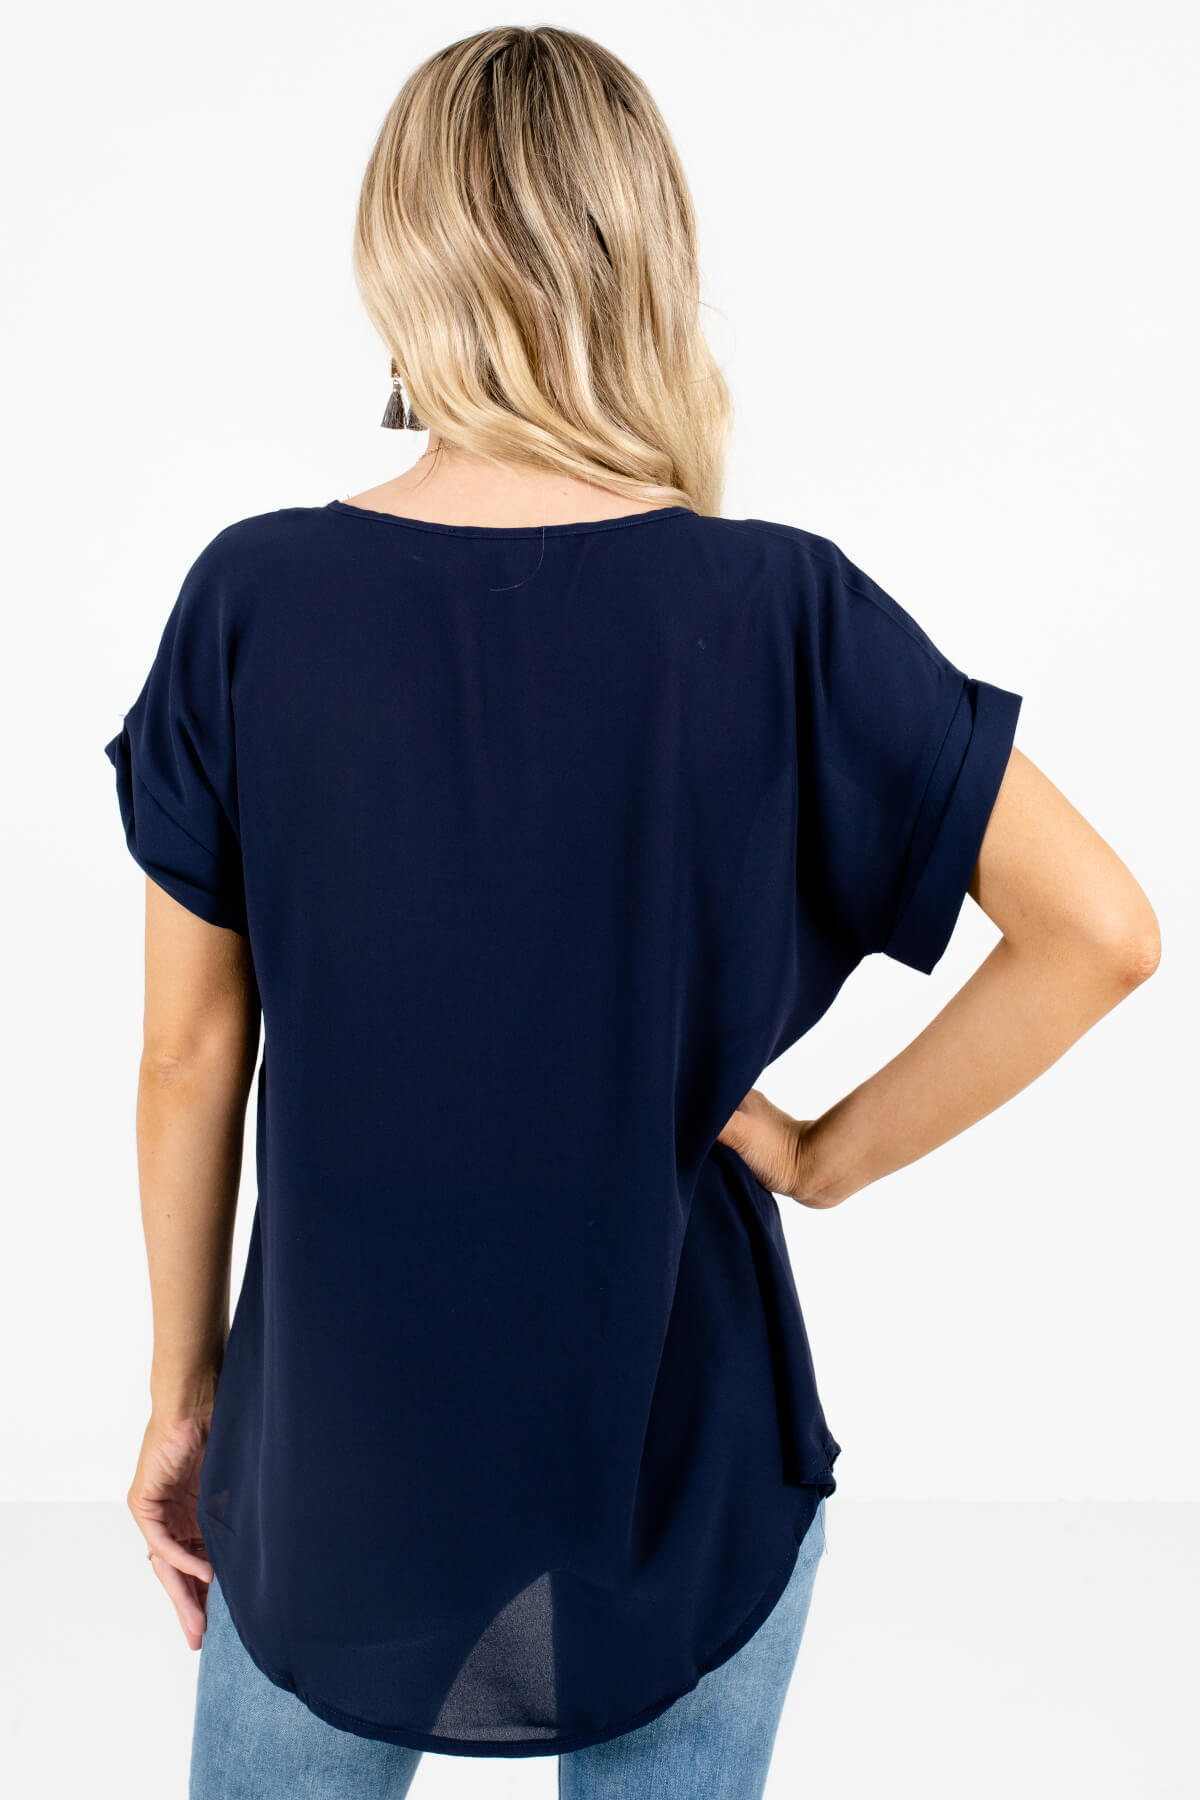 Women’s Navy Blue Cuffed Sleeve Boutique Blouse